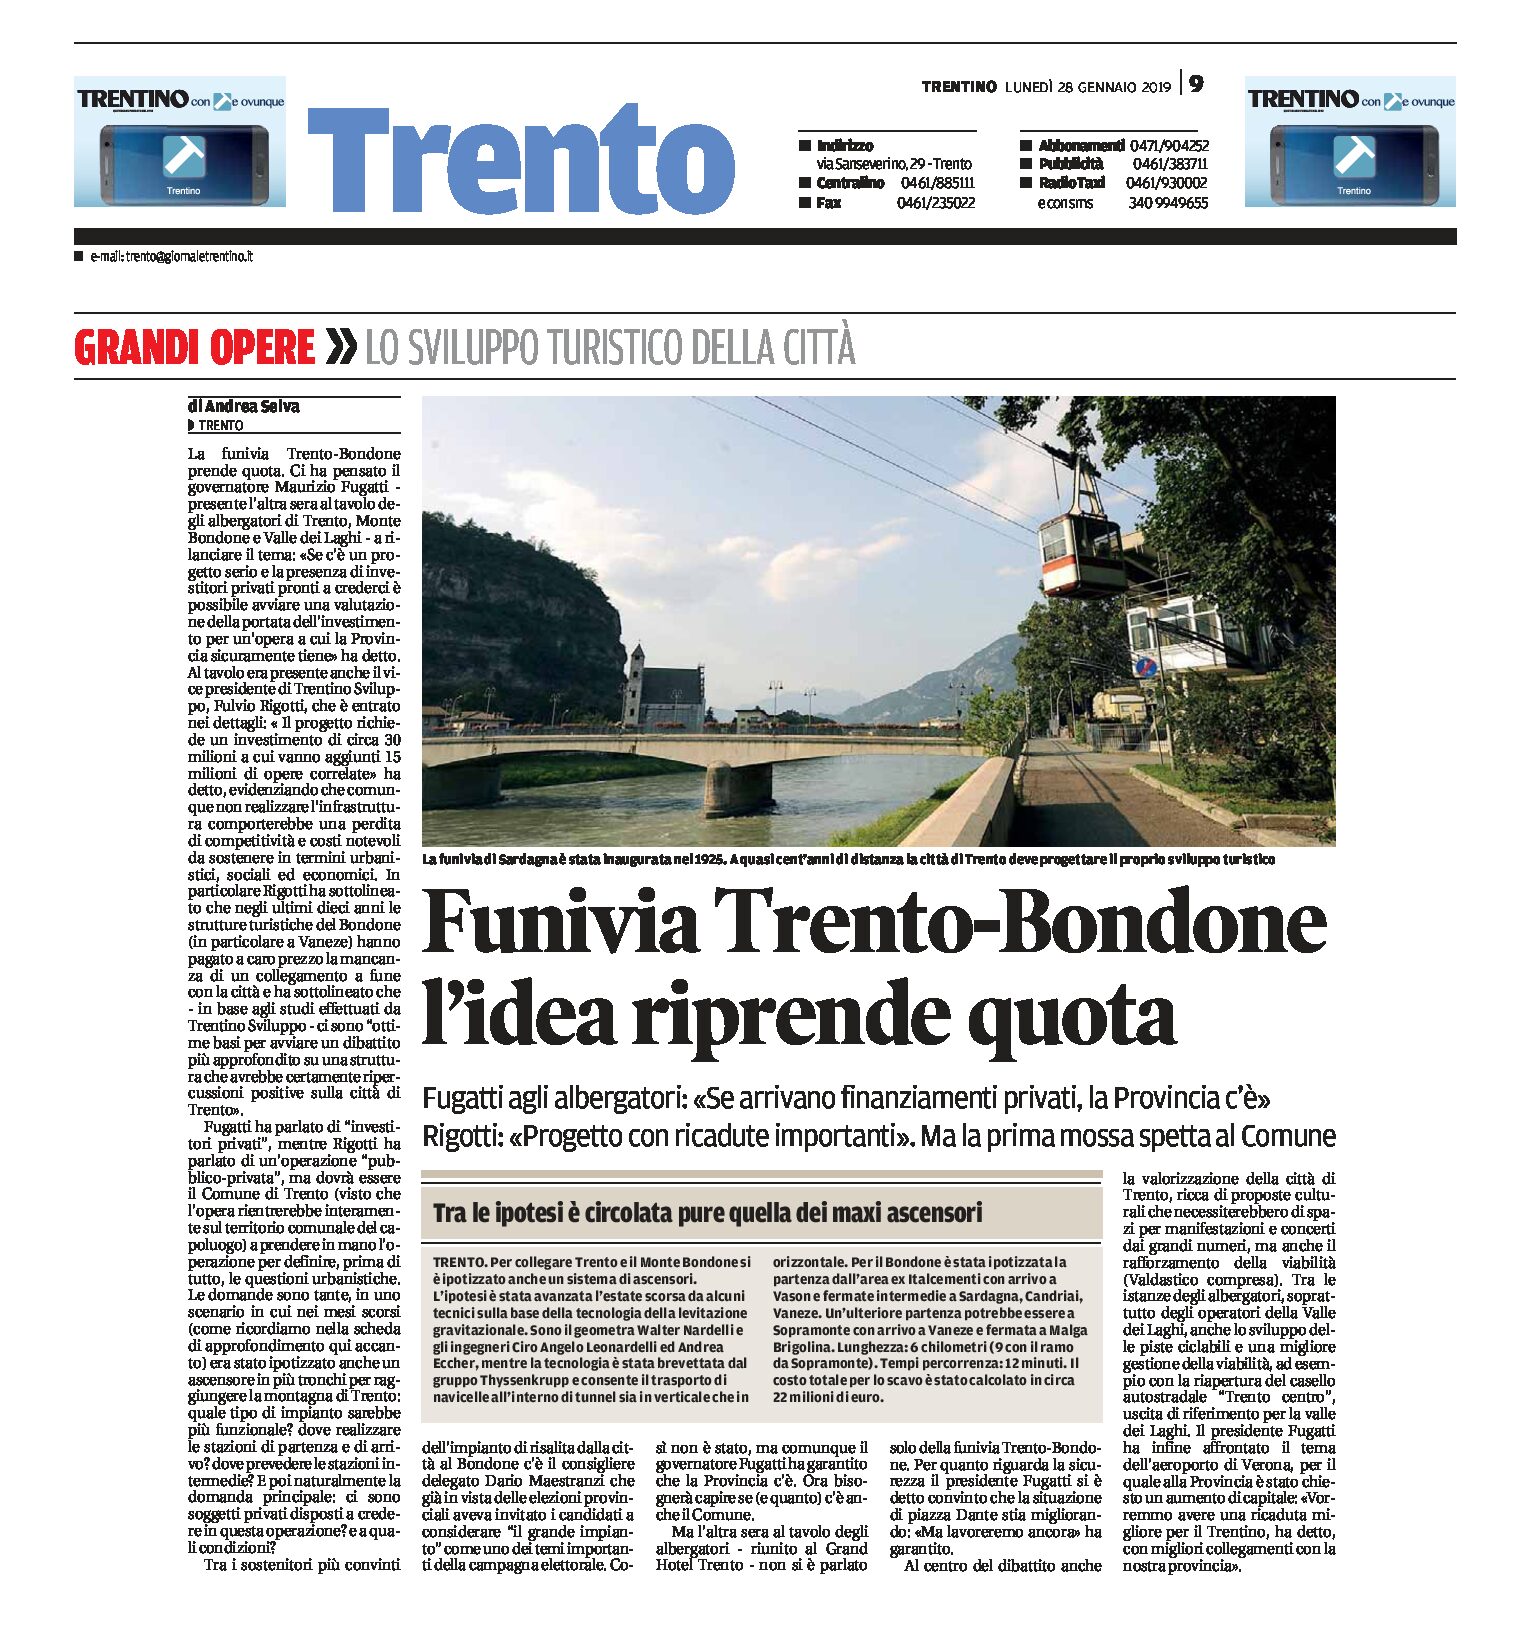 Funivia Trento-Bondone: l’idea riprende quota